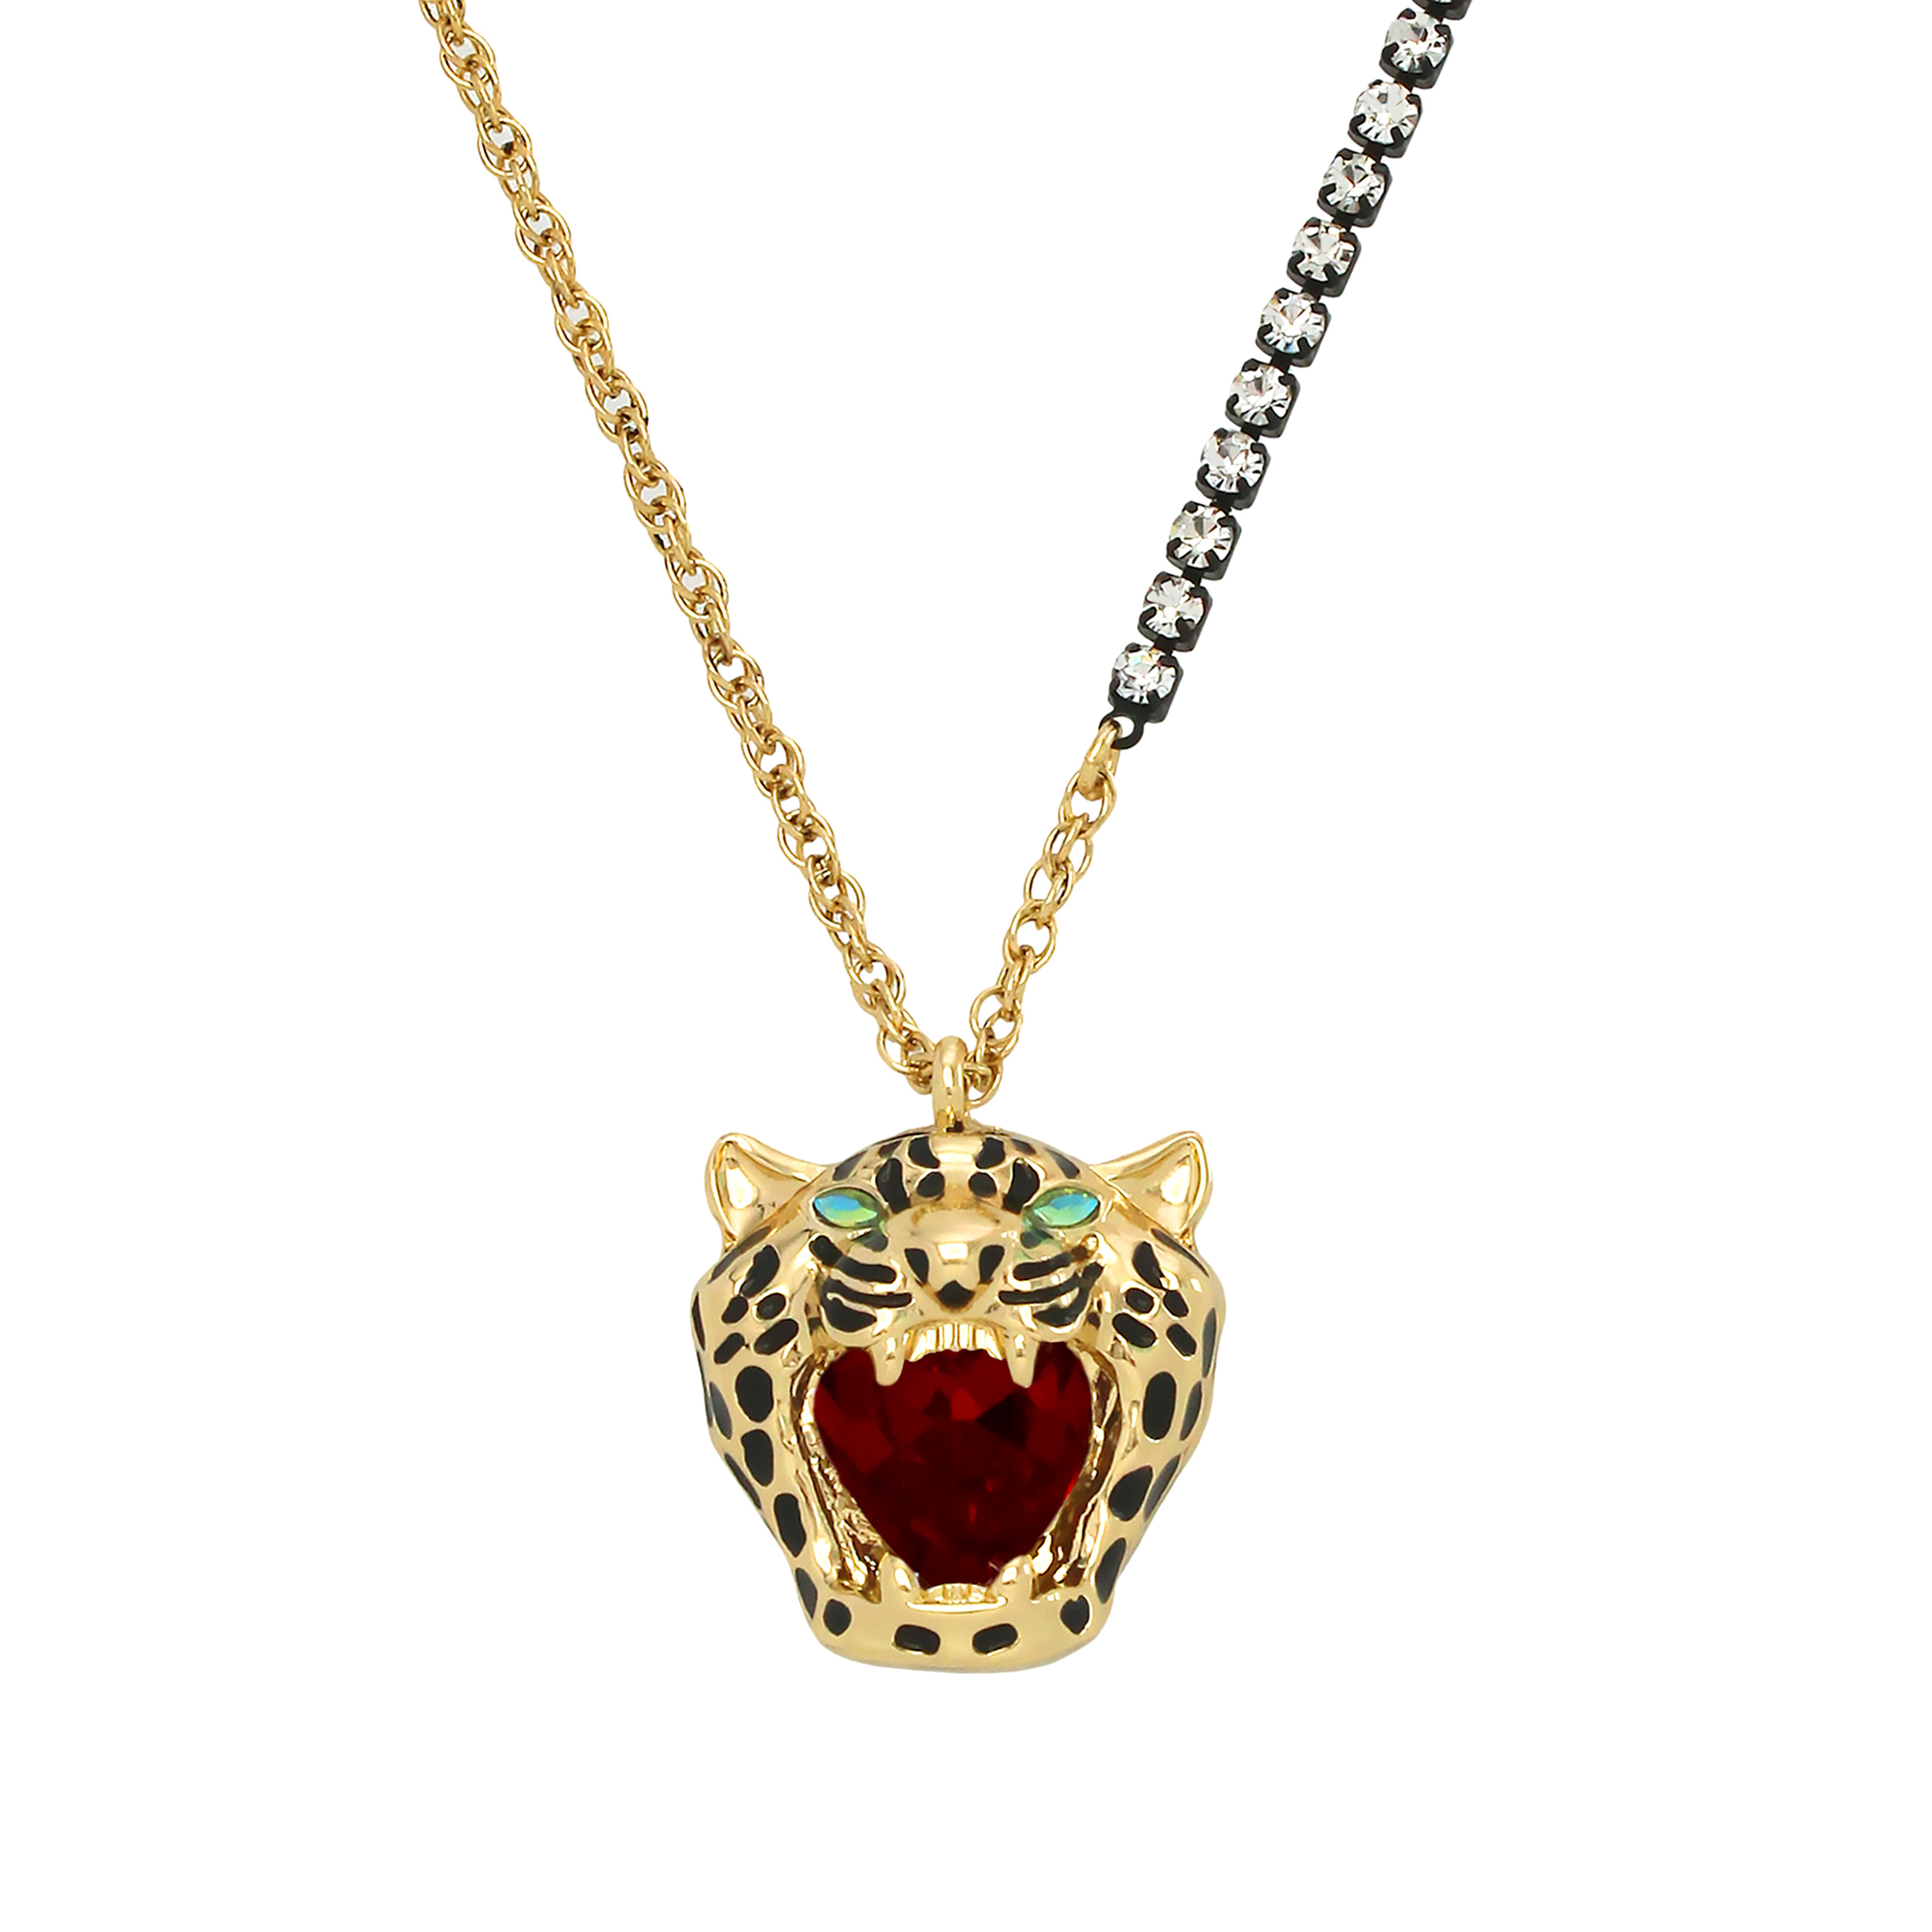 Bijuterii Femei Betsey Johnson Cheetah Pendant Necklace RedGold